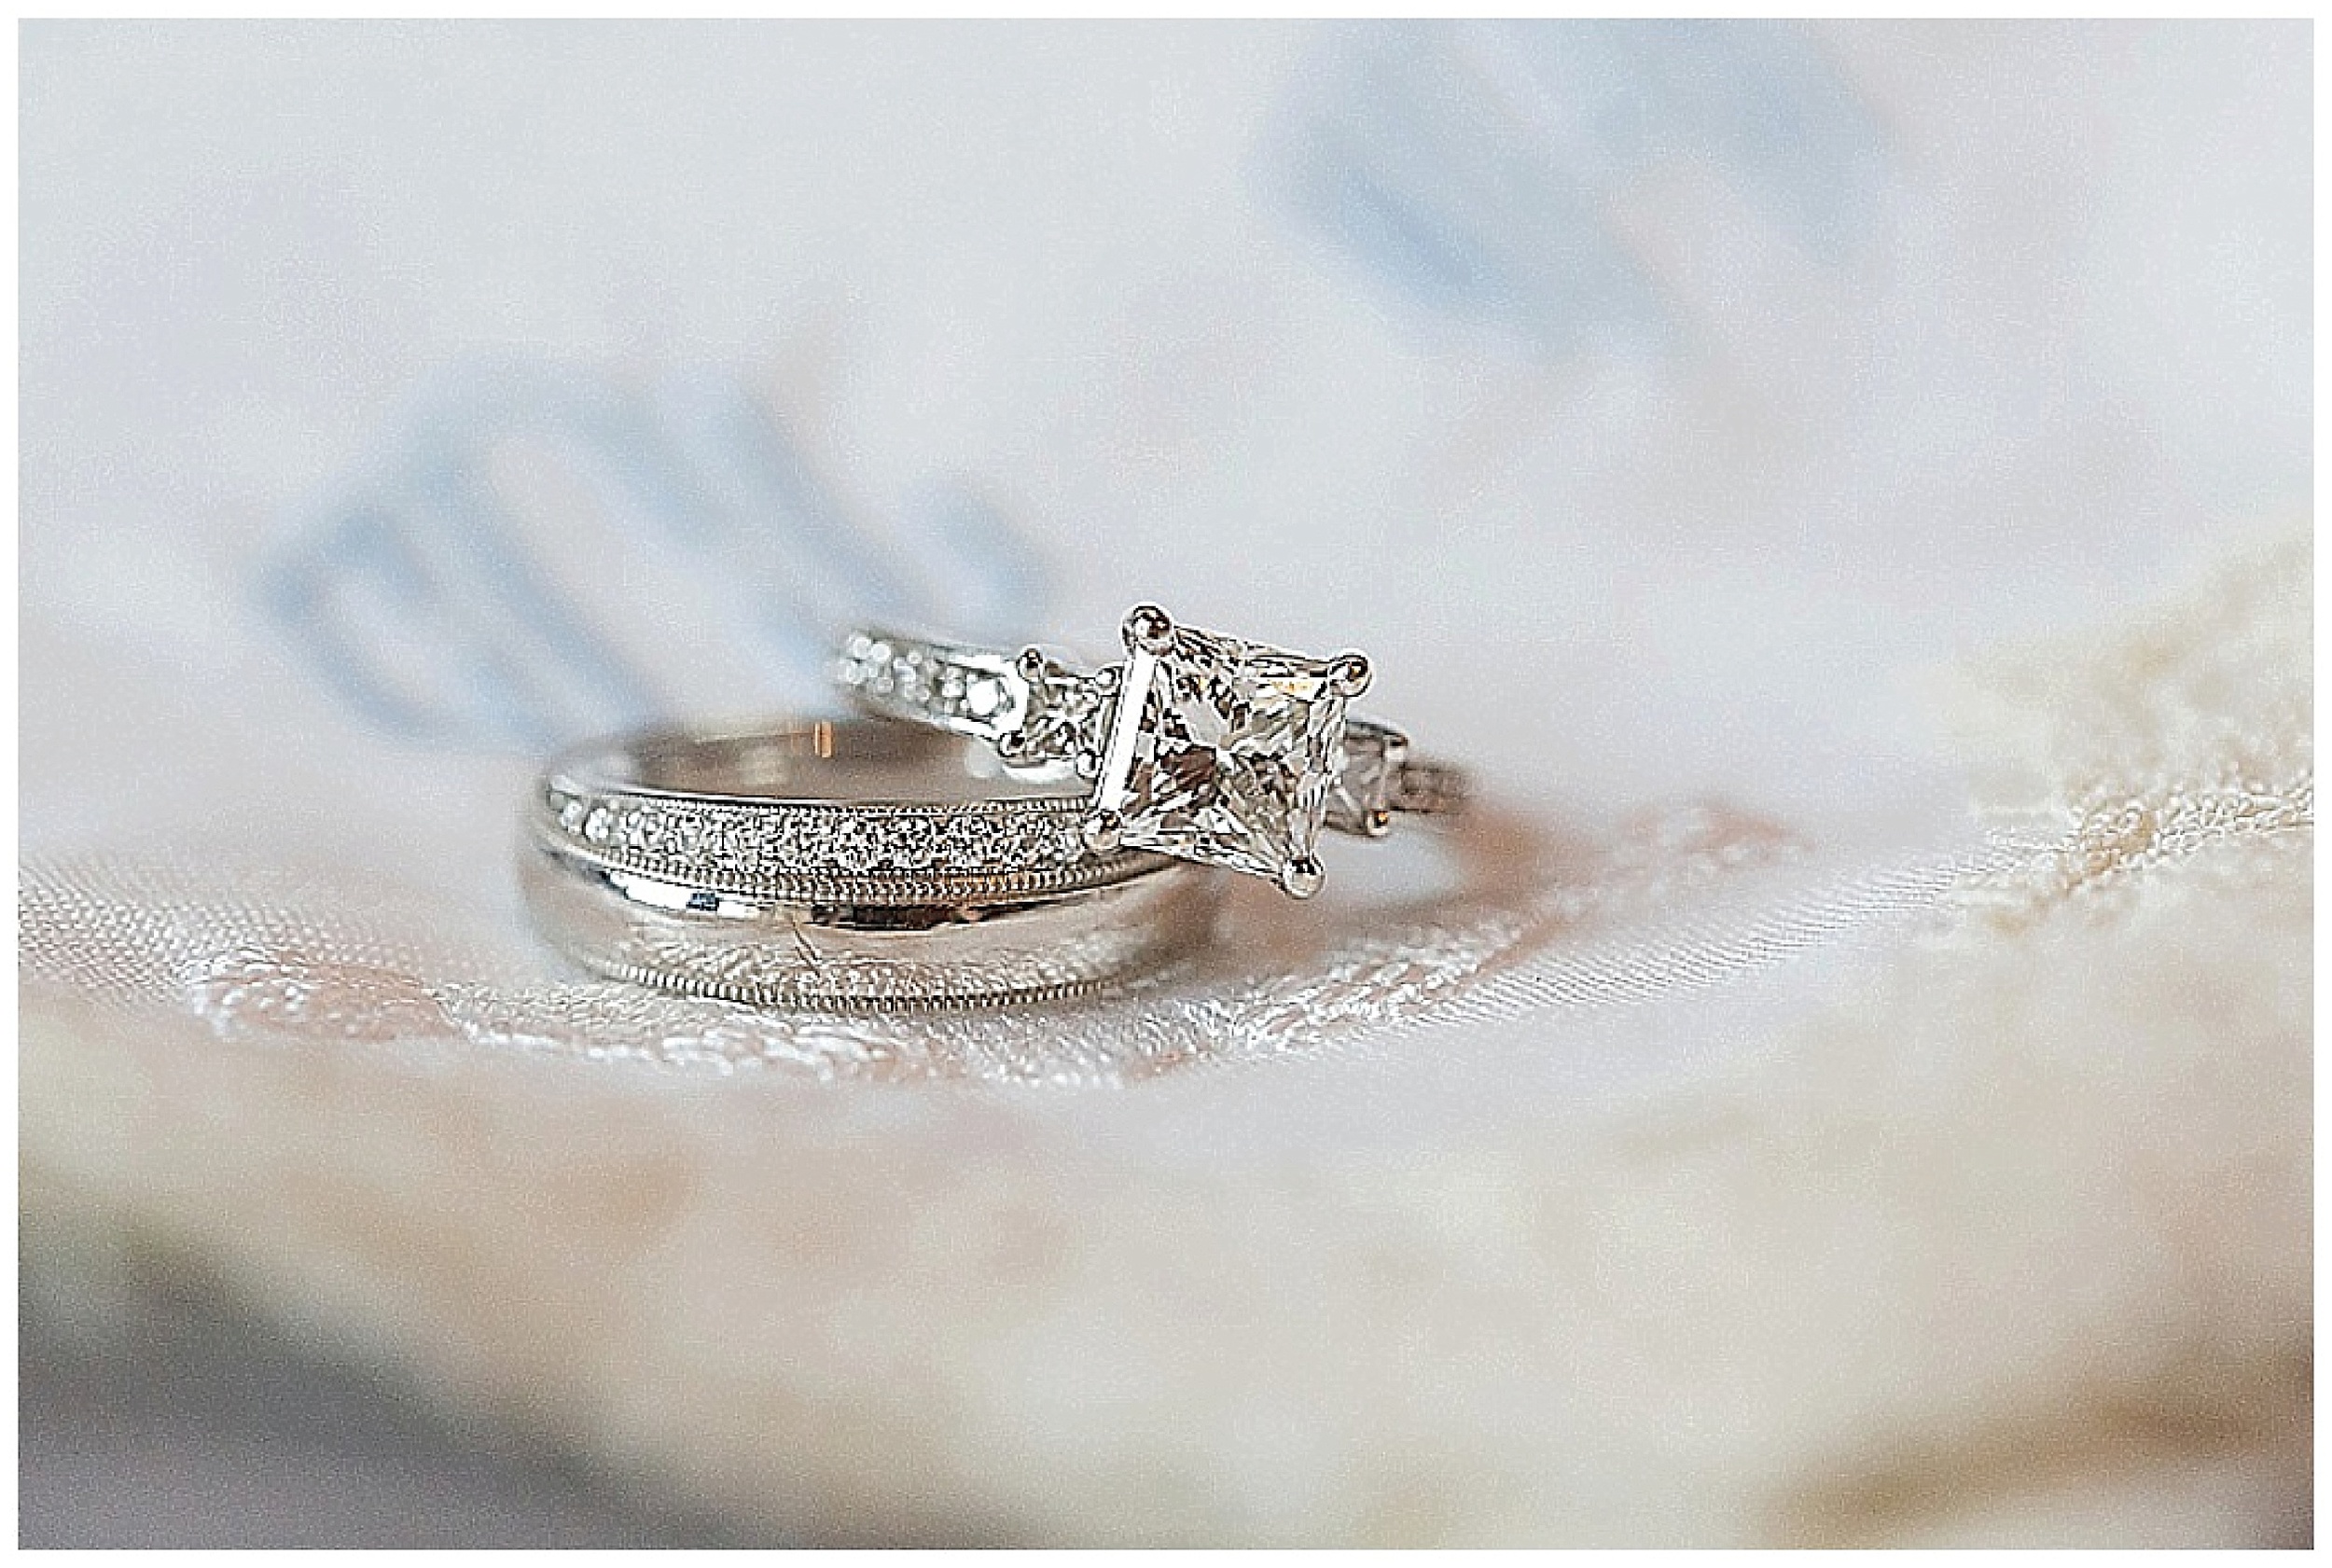 Princess Cut Engagement Ring on handkerchief